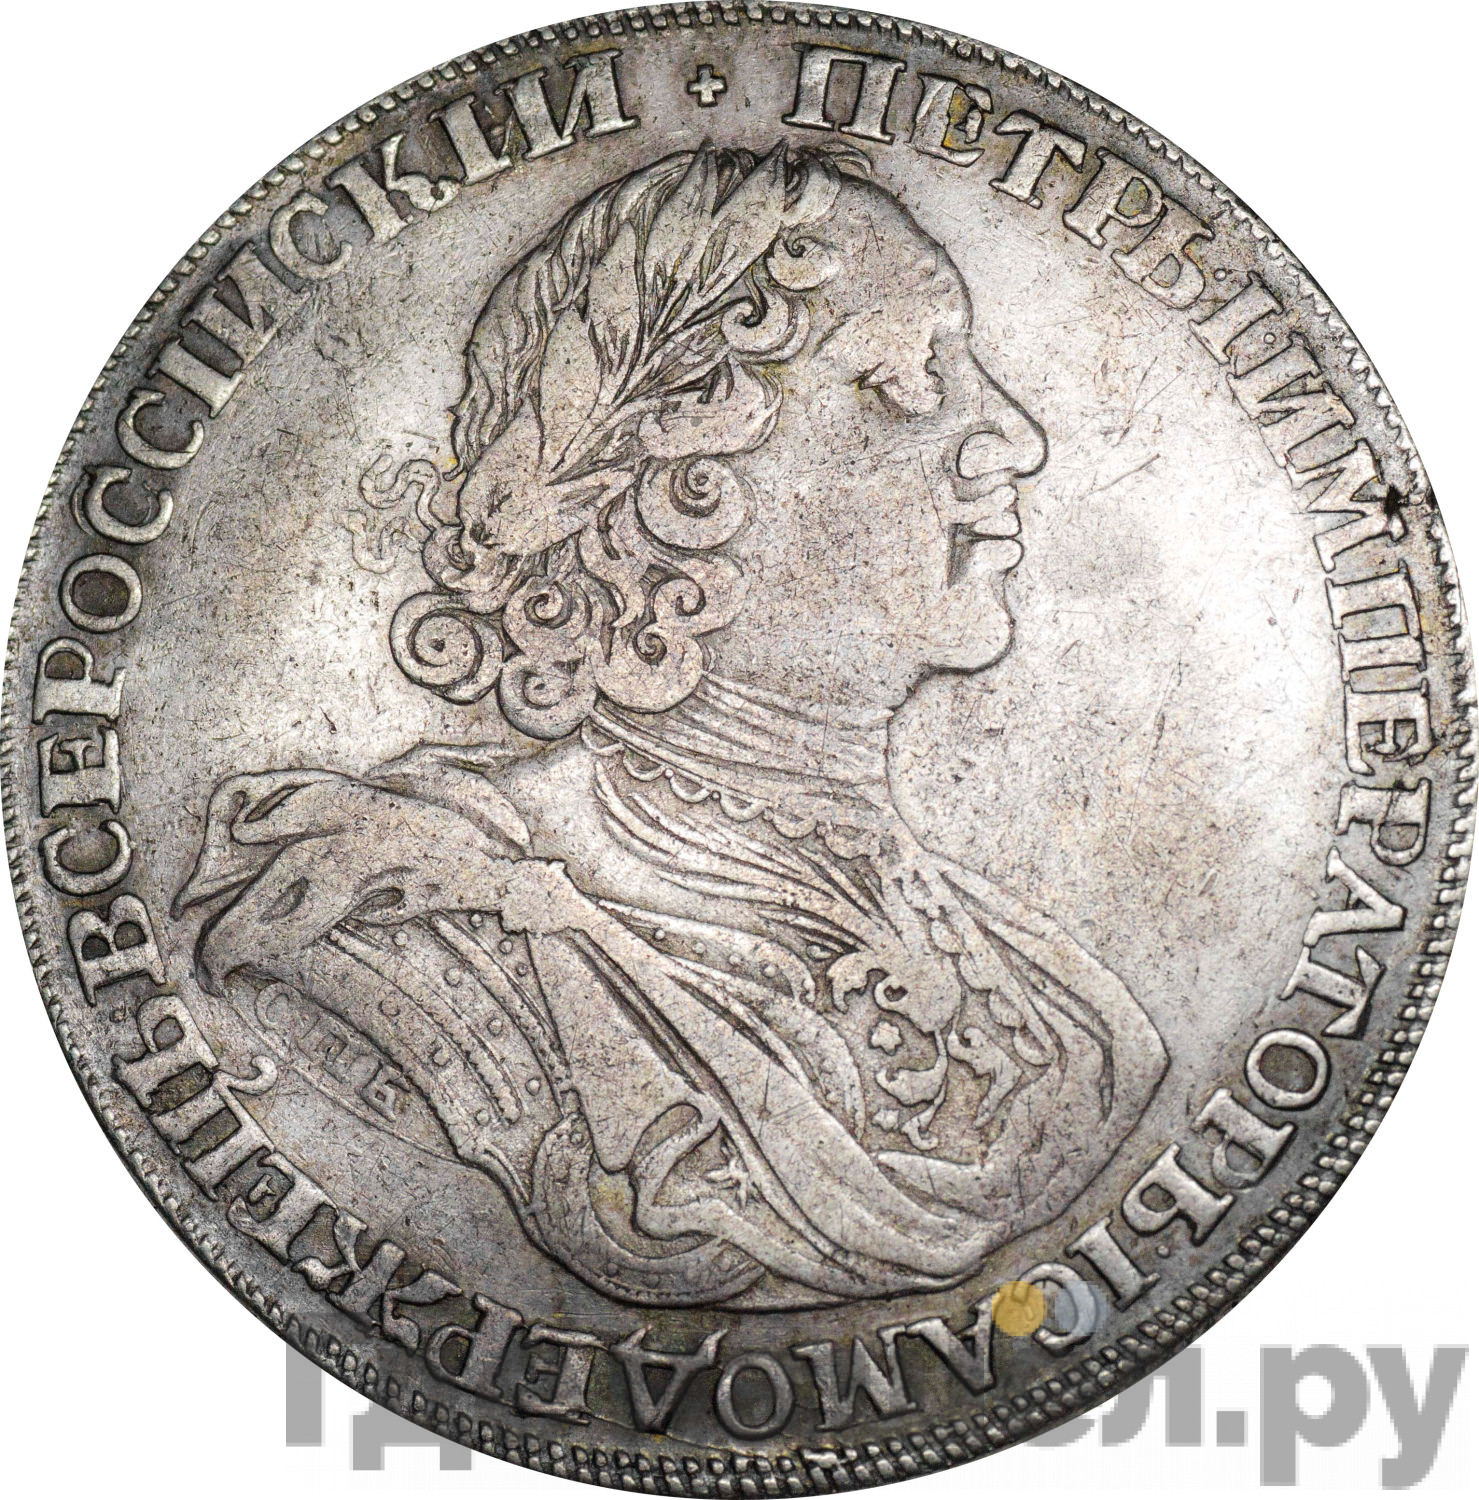 1 рубль 1725 года